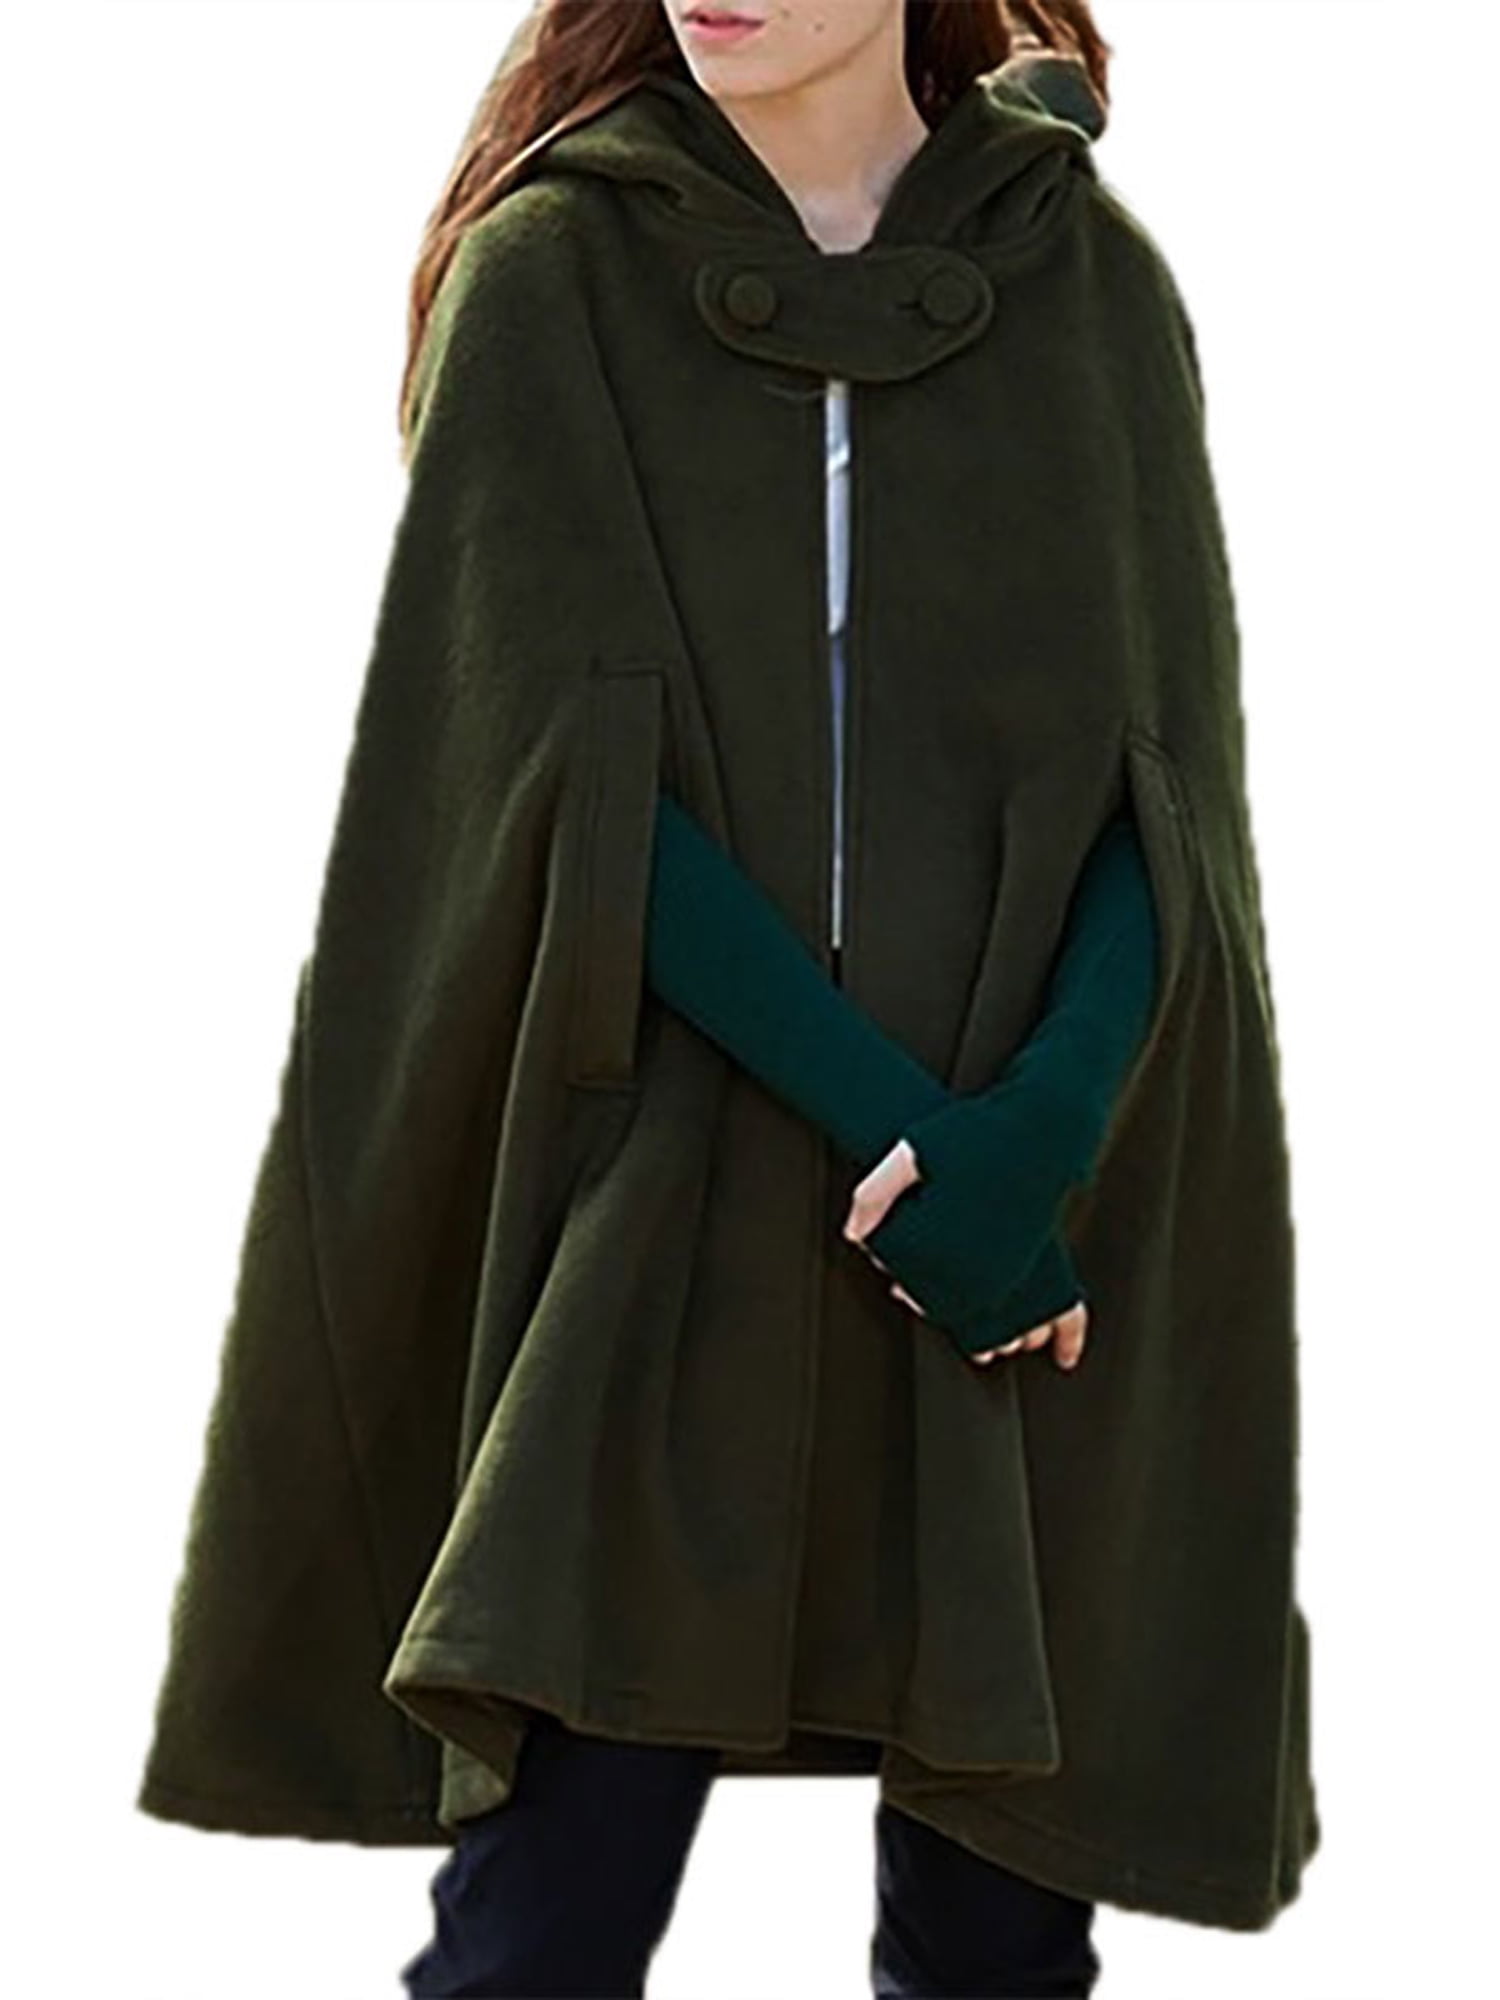 UK Mens Womens Poncho Cloak Cape Loose Coat Jacket Outdoor Fashion Outwear Tops